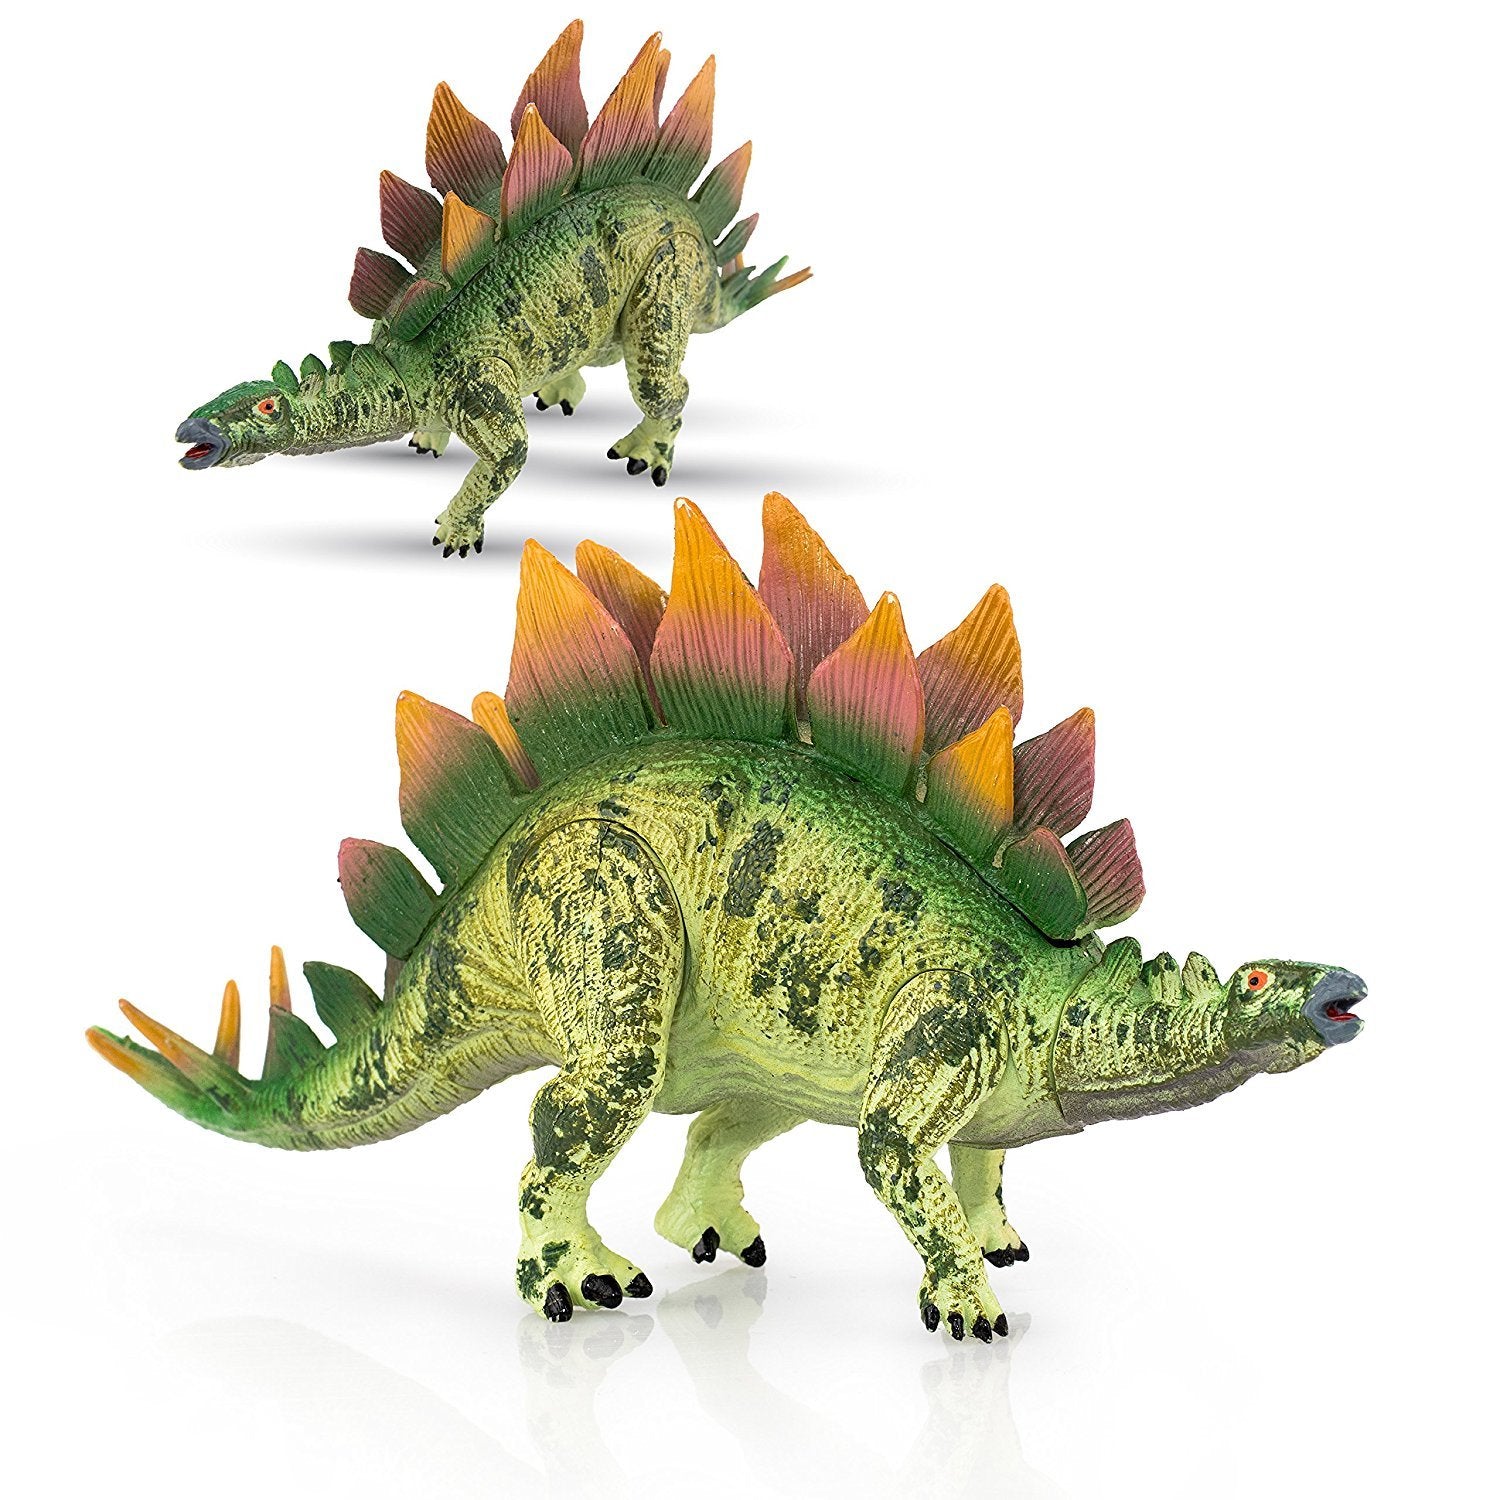 King Me World Cretaceous Stegosaurus Dinosaur Animal Figure